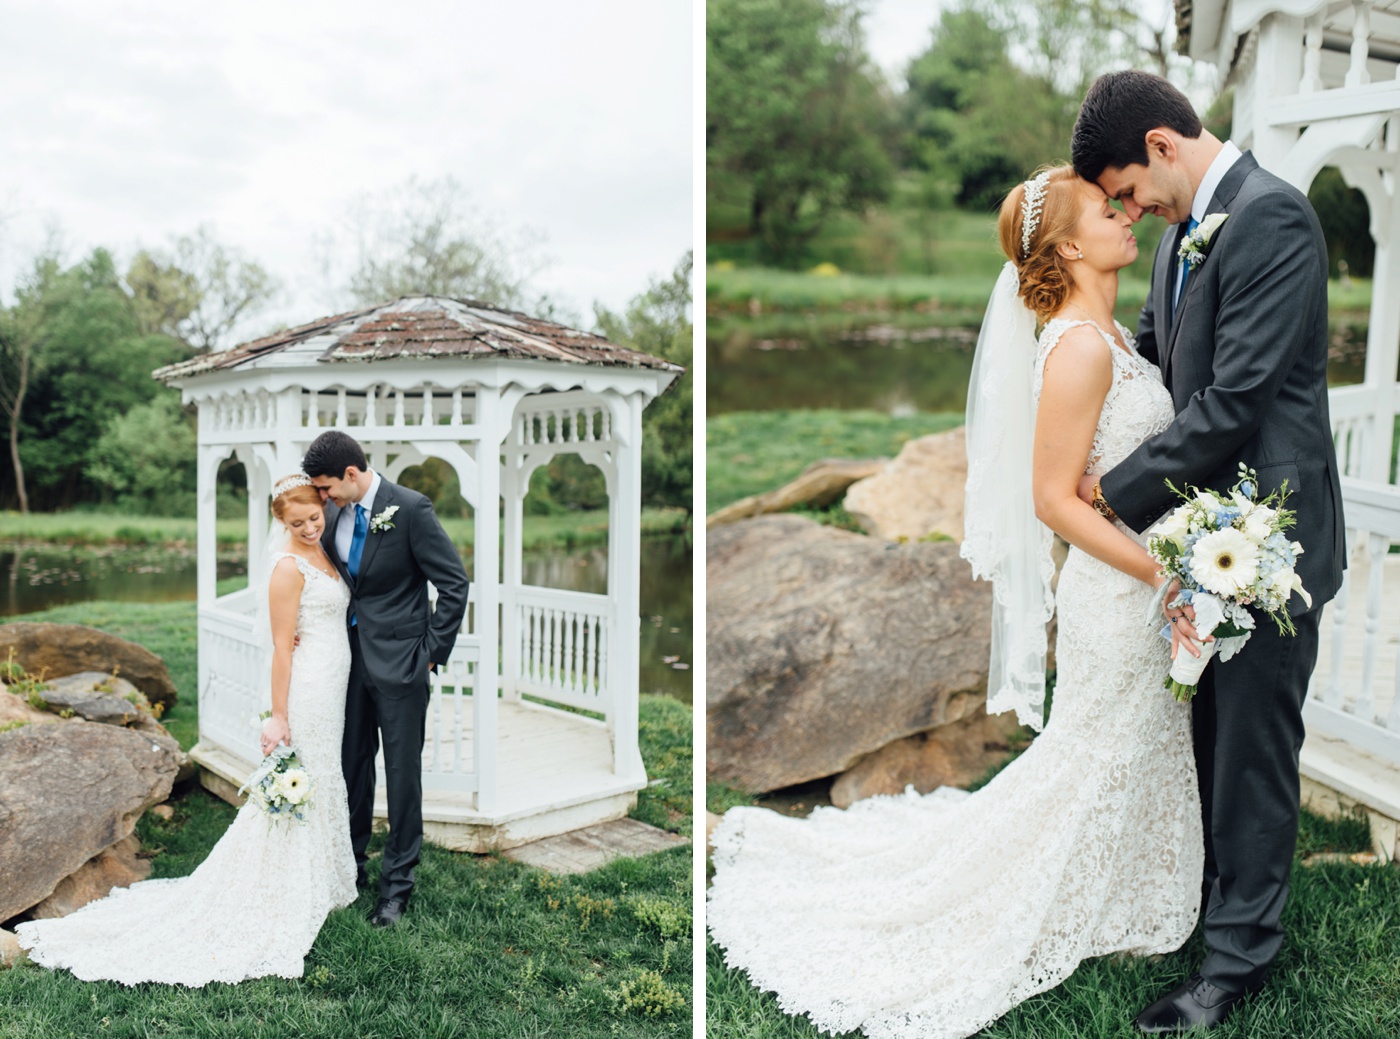 Mason + Allie - Mountain Branch Golf Club Ceremony - Joppa Maryland Wedding Photographer - Alison Dunn Photography photo